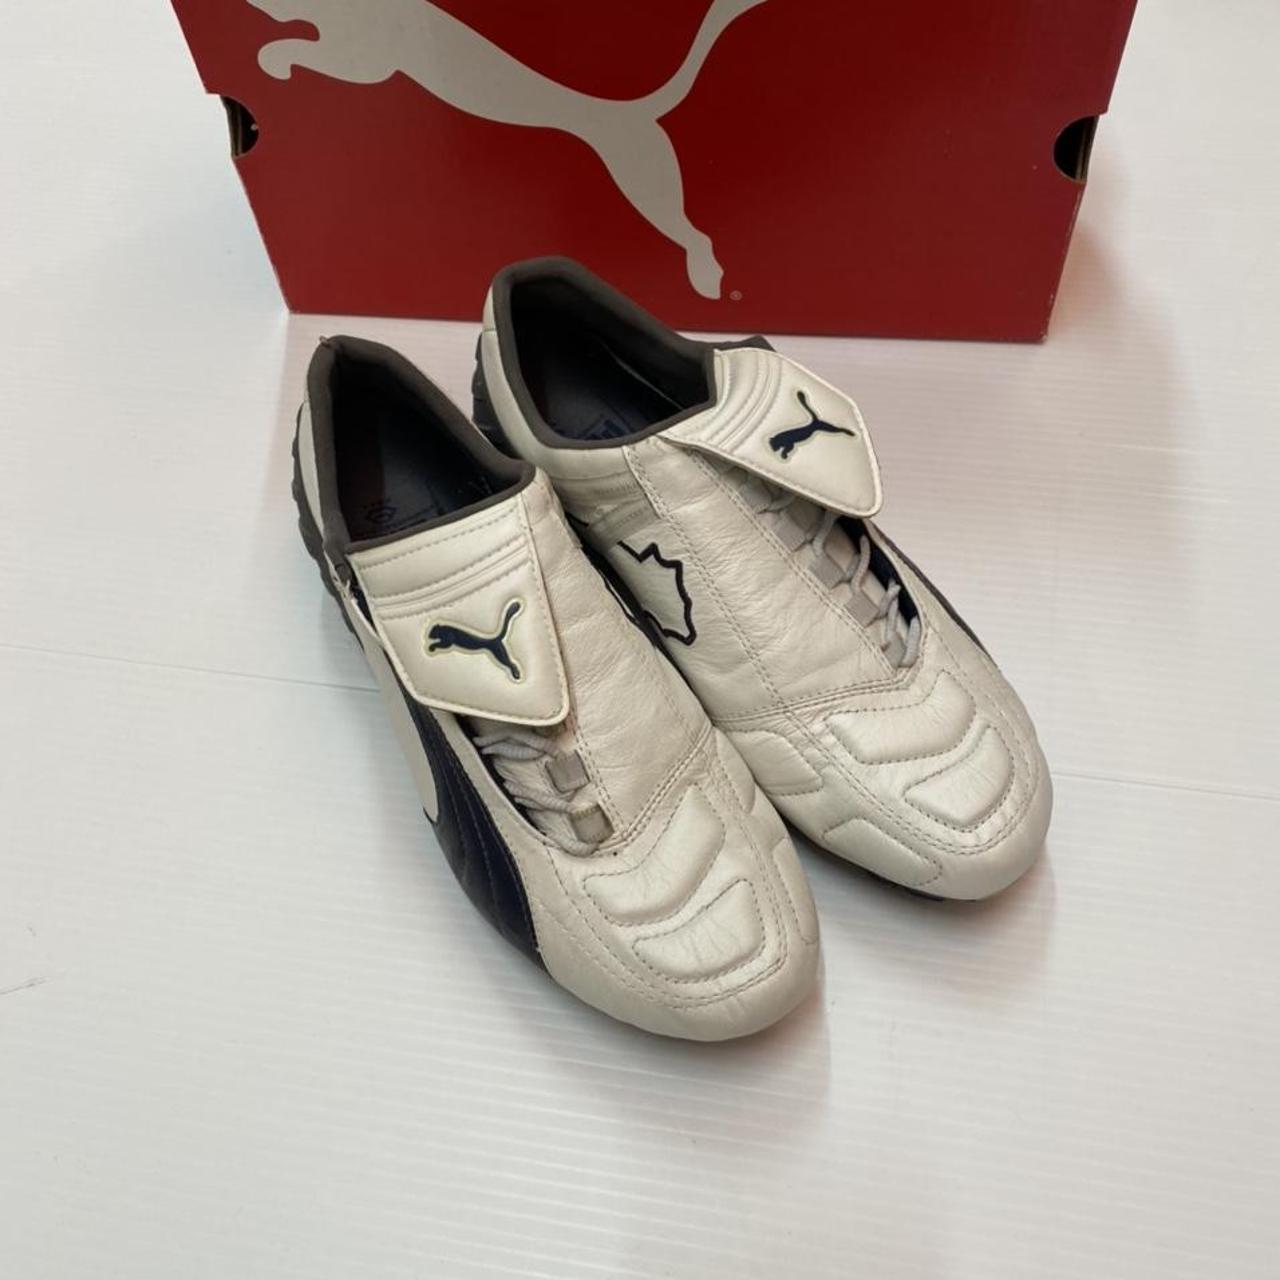 Puma Konstrukt Gci Fg Football boots *Brand New*... - Depop